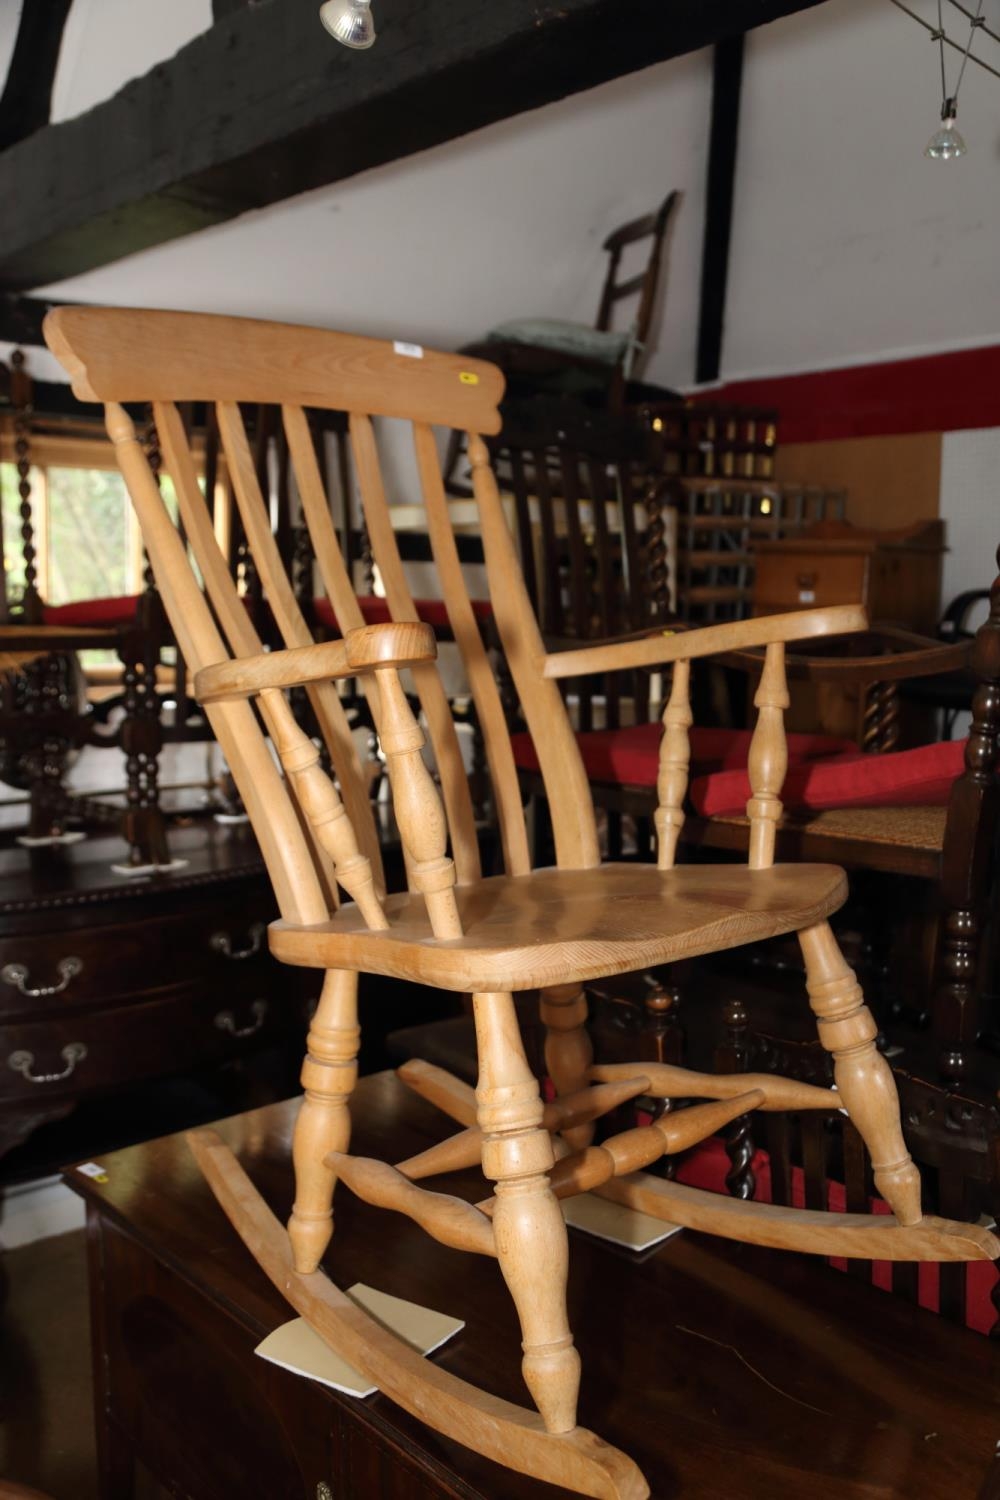 A beech lath back farmhouse elbow rocking chair